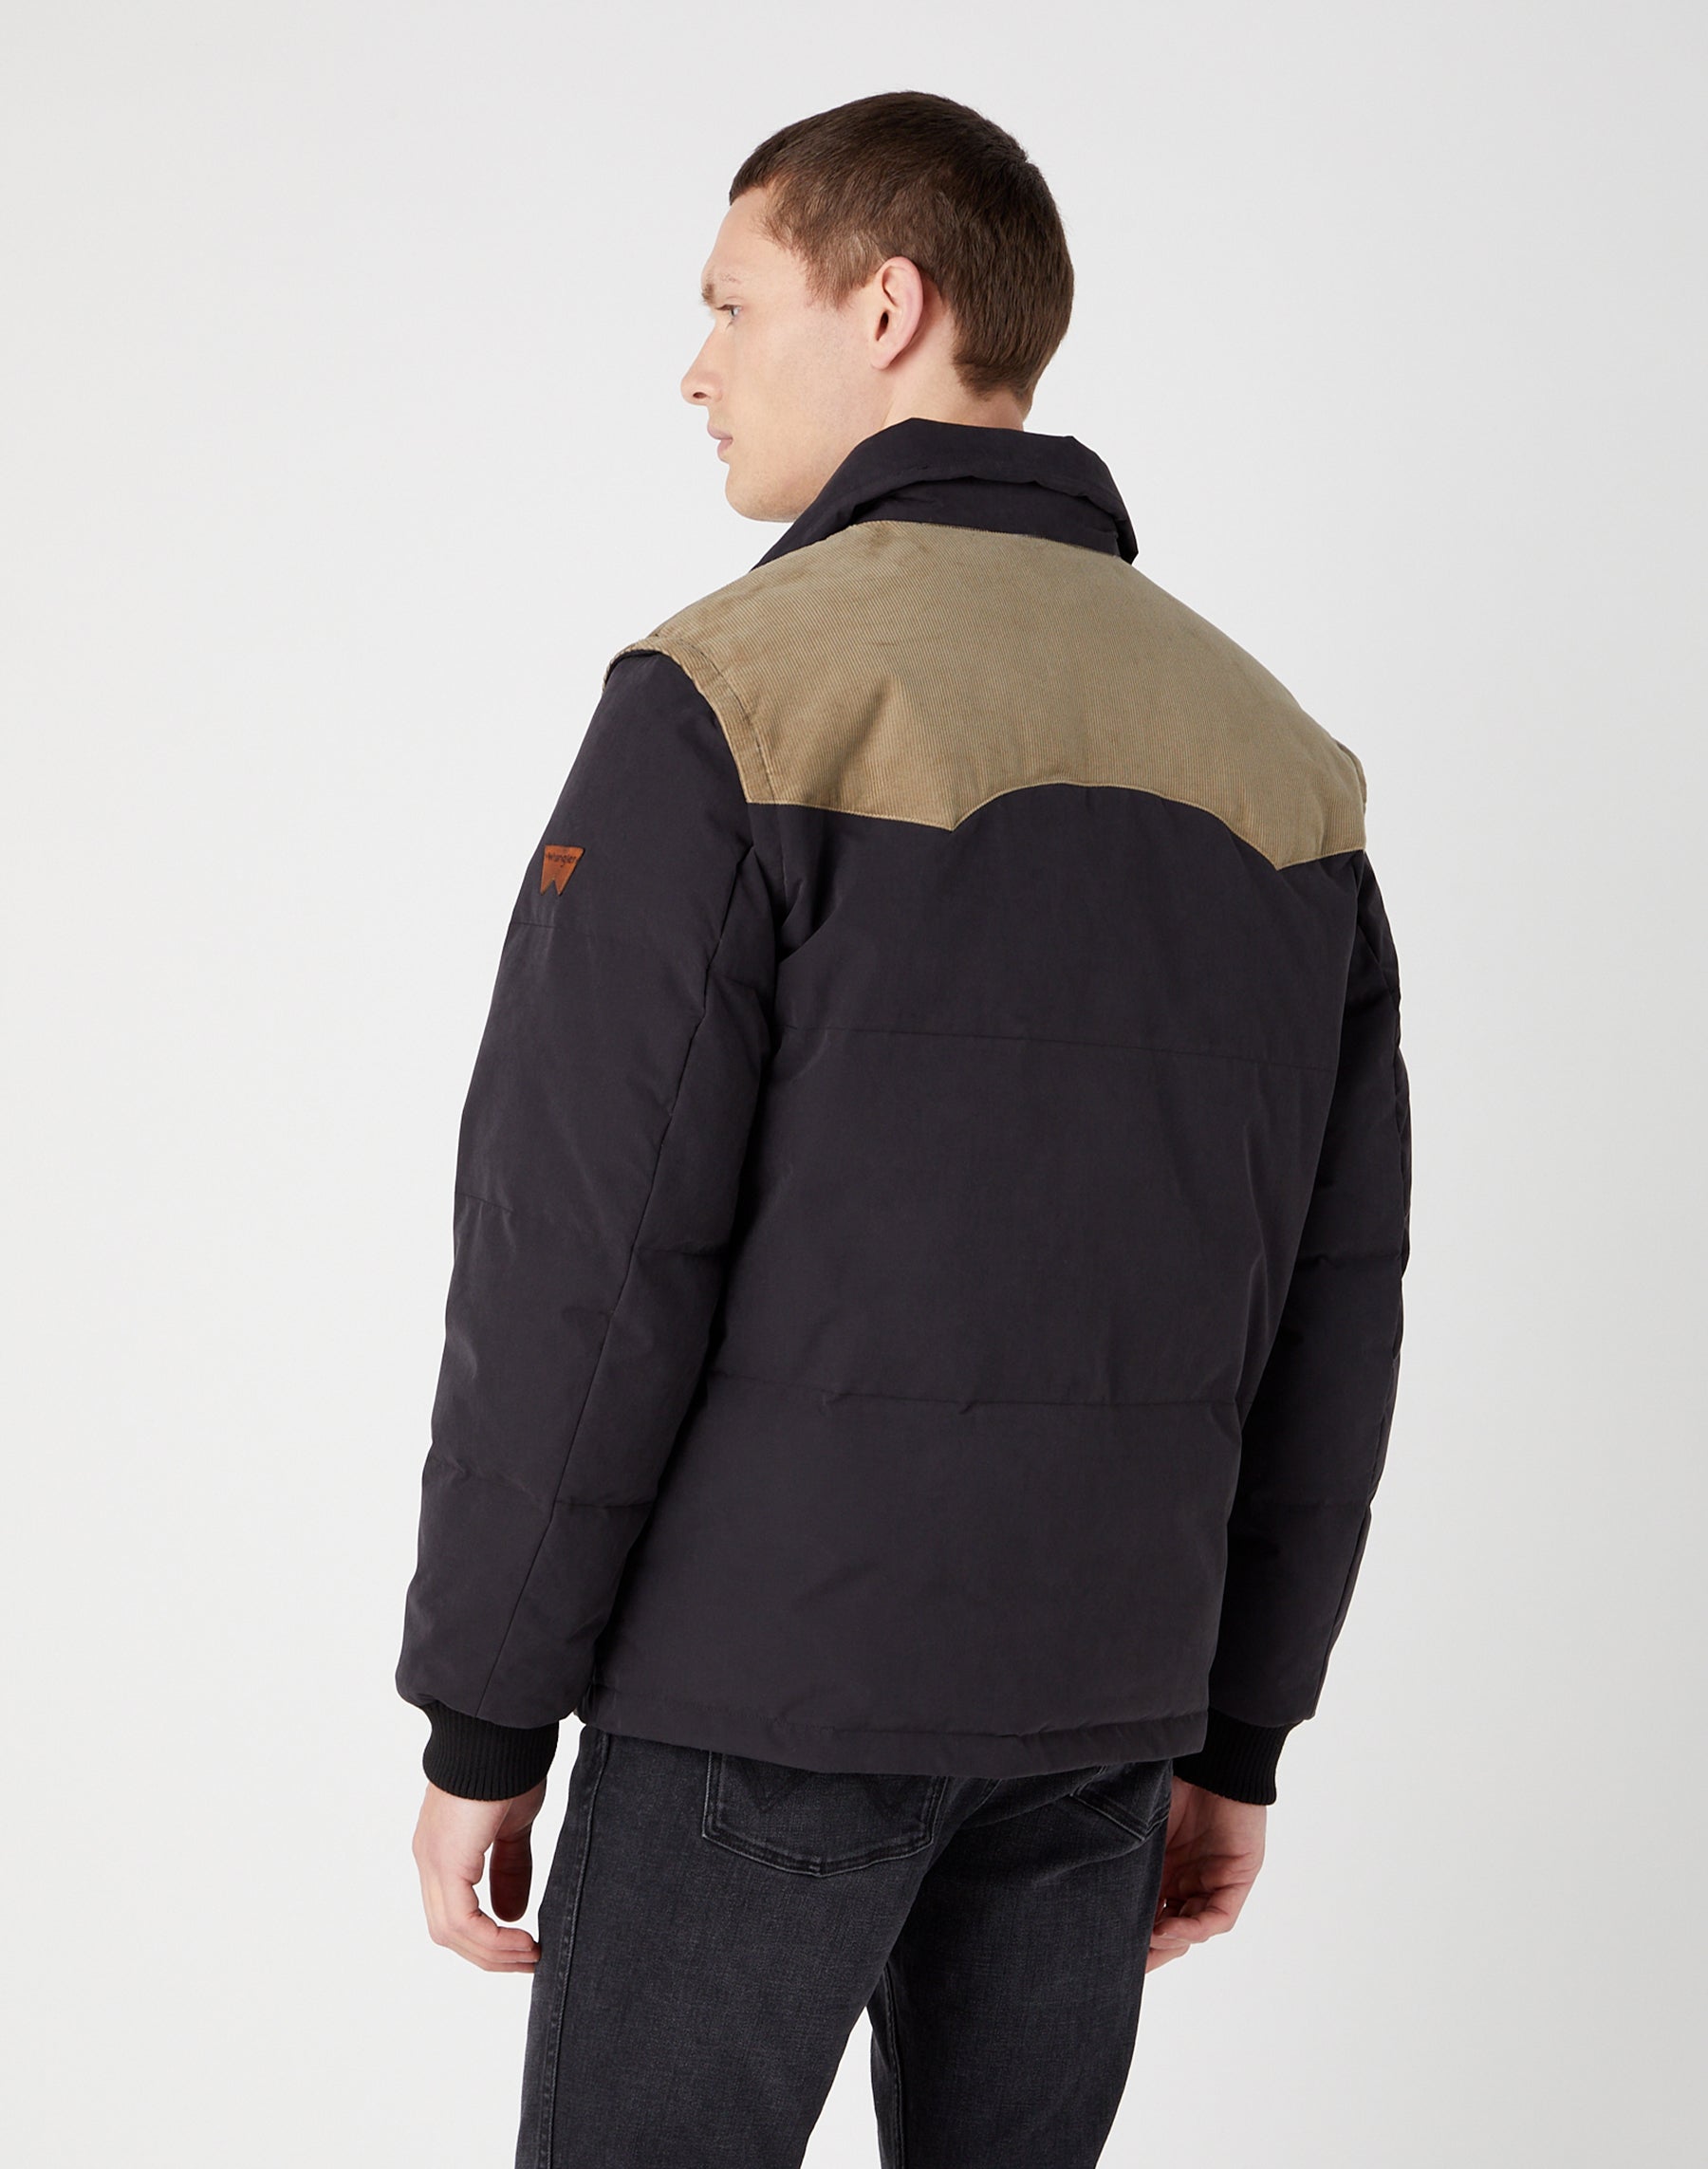 Detachable Sleeve Jacket in Black Jacken Wrangler   